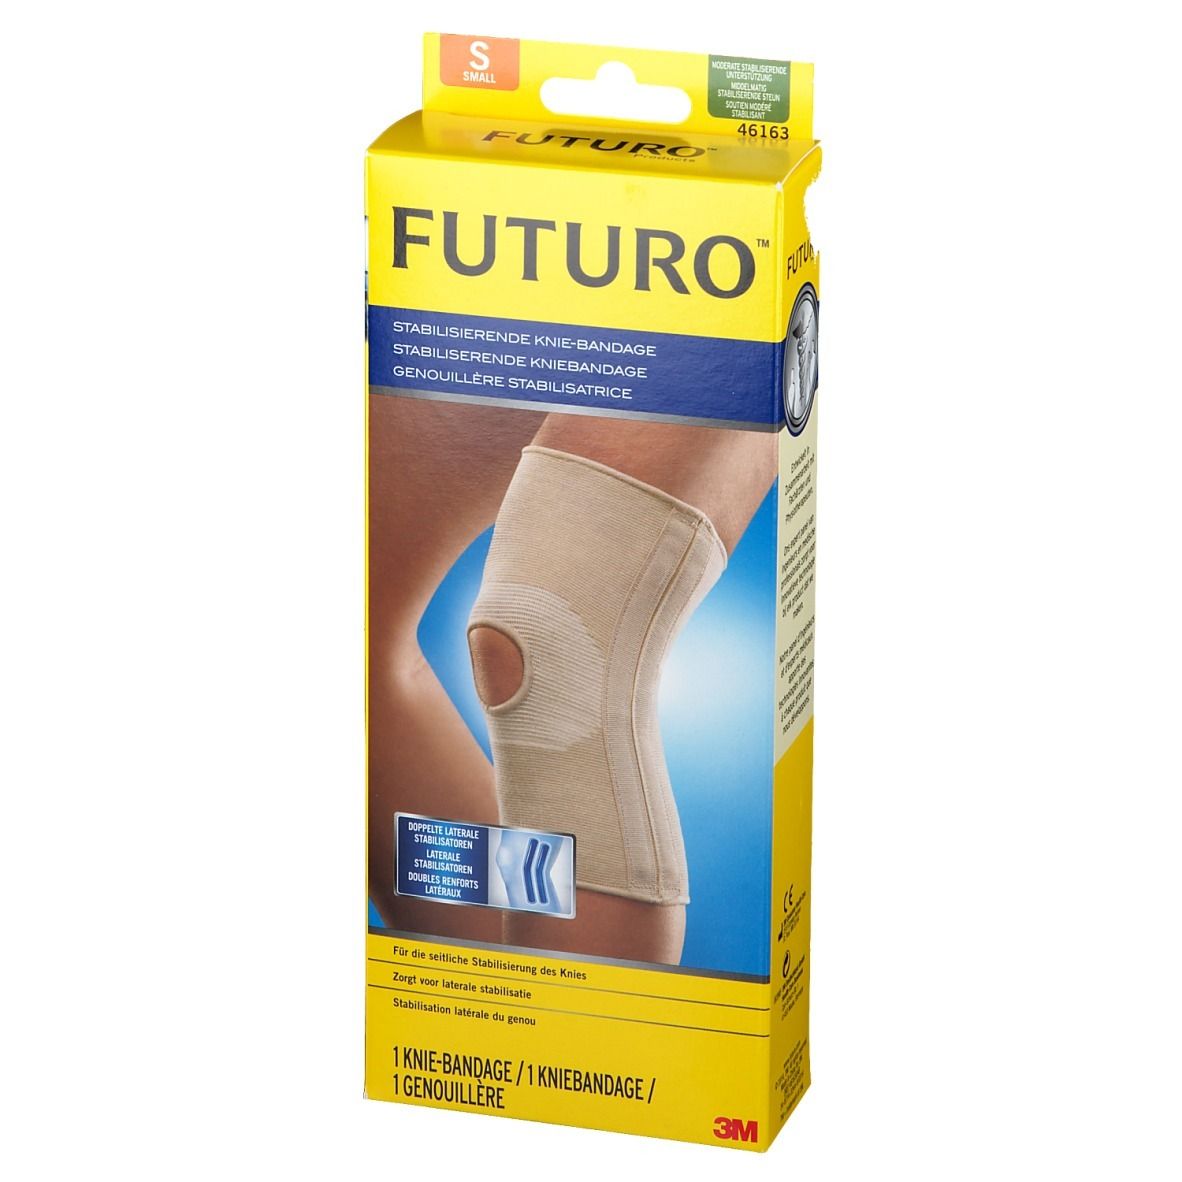 FUTURO™ stabilisierende Knie-Bandage Gr. S